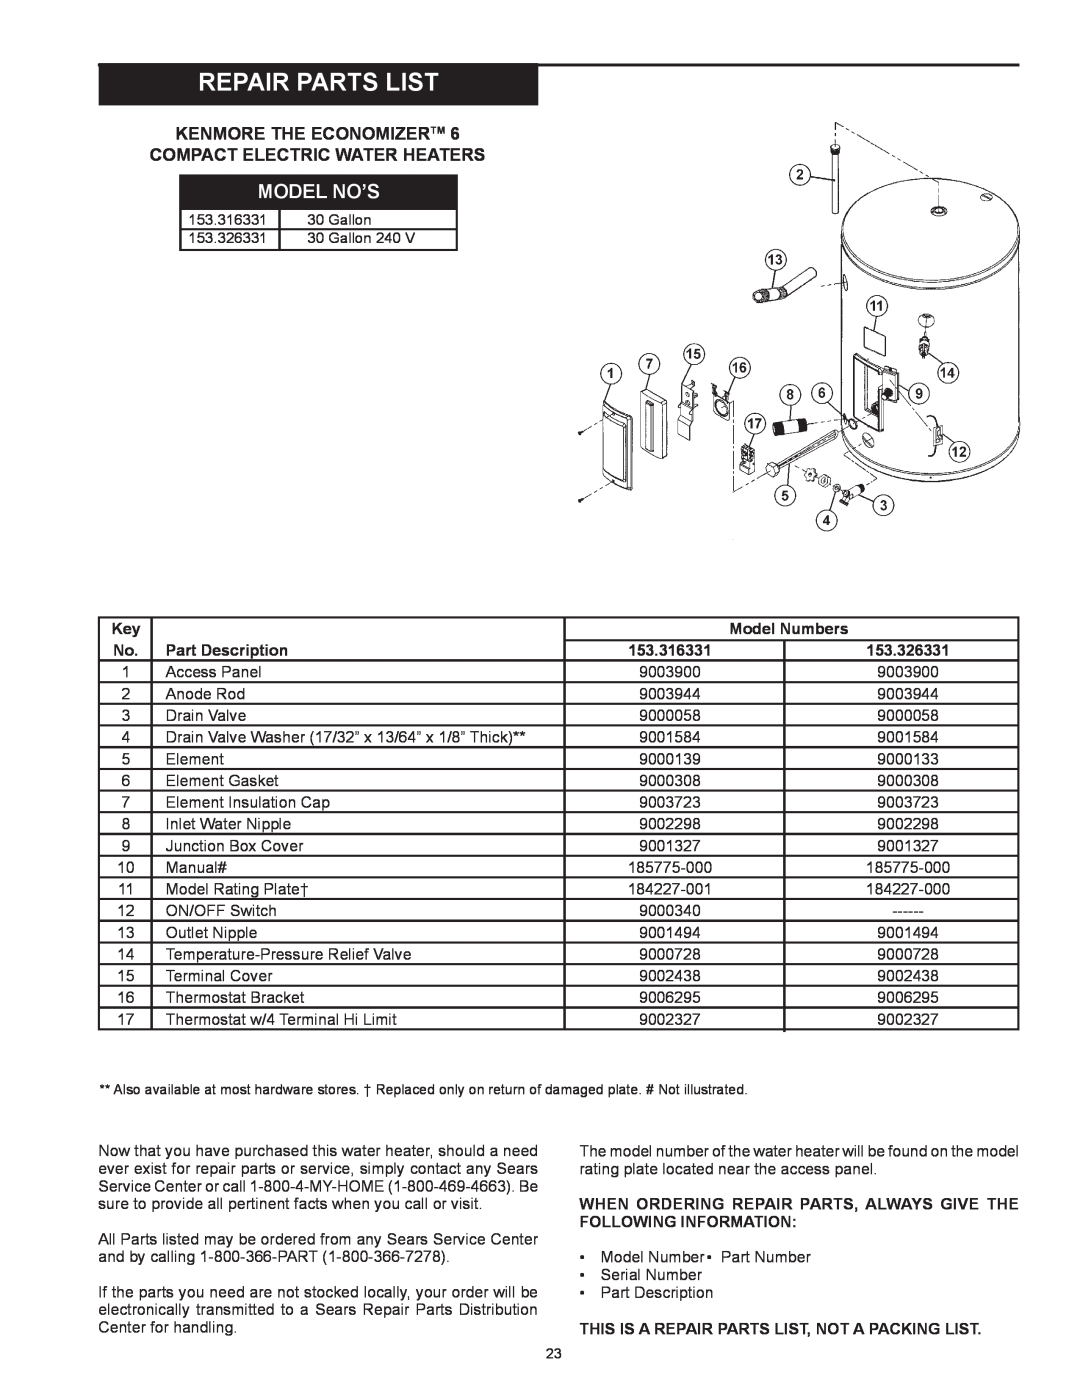 Kenmore 153.31604 owner manual Model Numbers, Part Description, Repair Parts List, Model No’S, Kenmore The Economizertm 